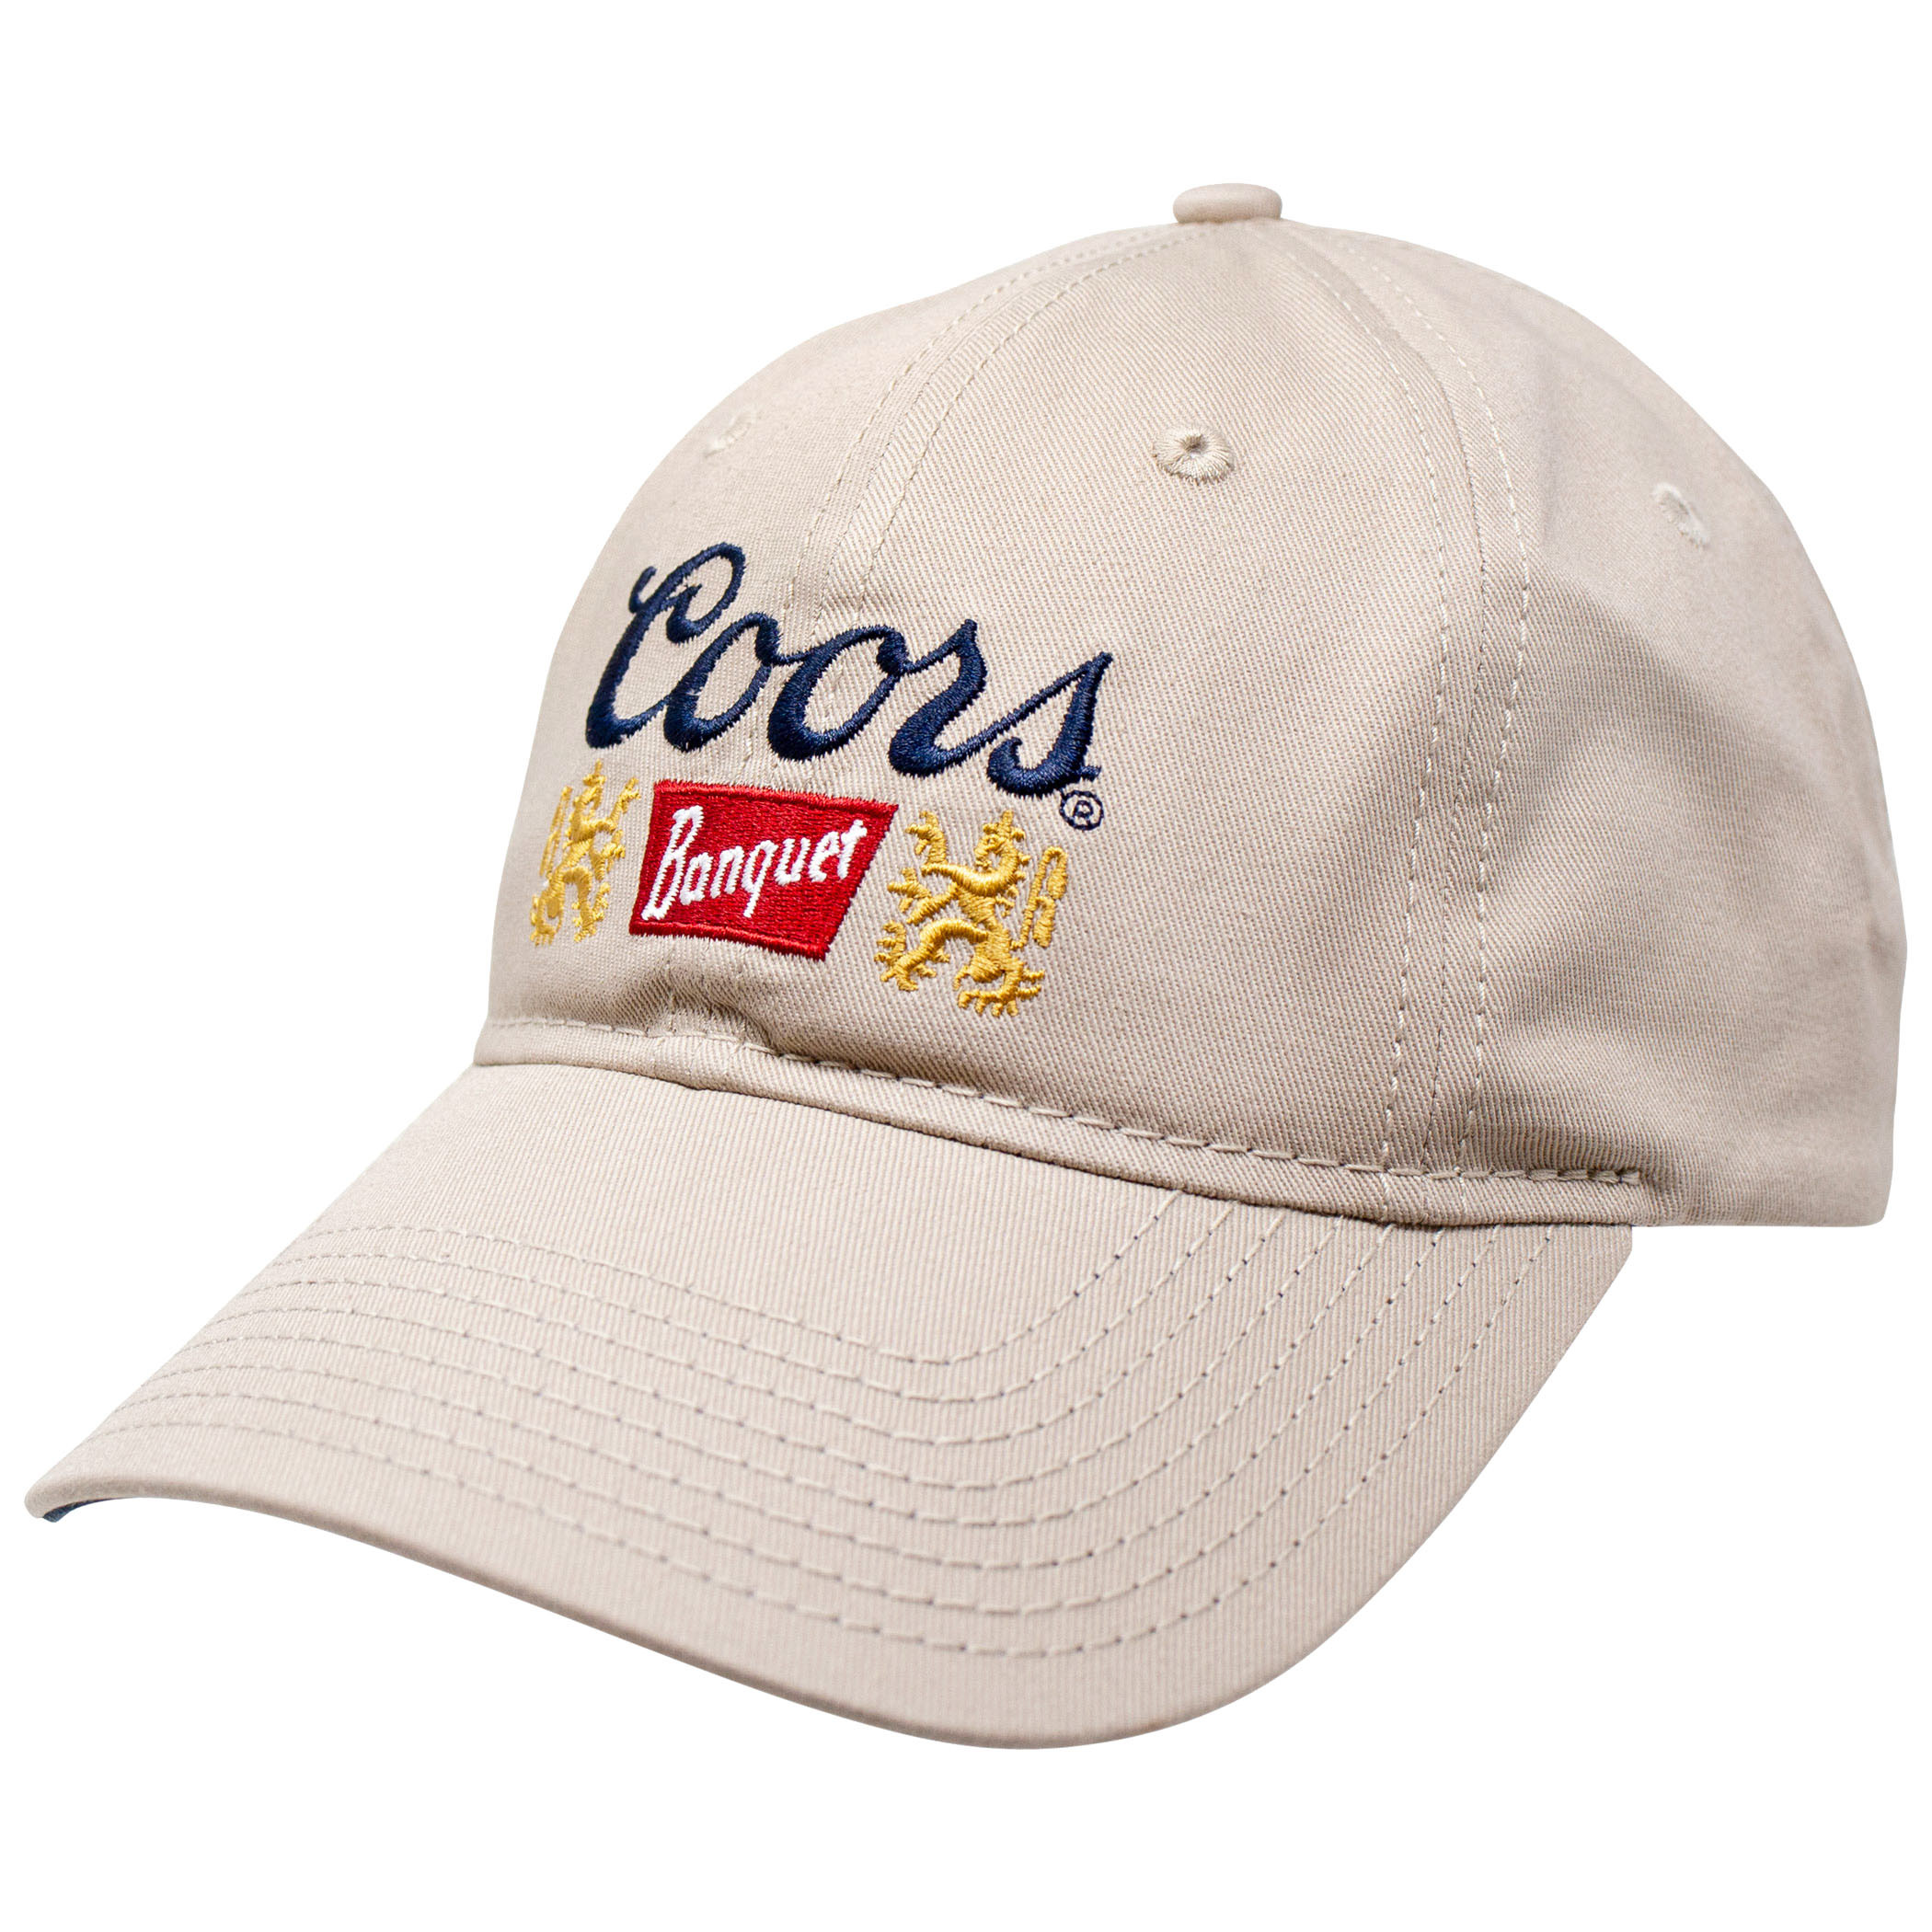 Coors Banquet Beer Logo Adjustable Khaki Hat